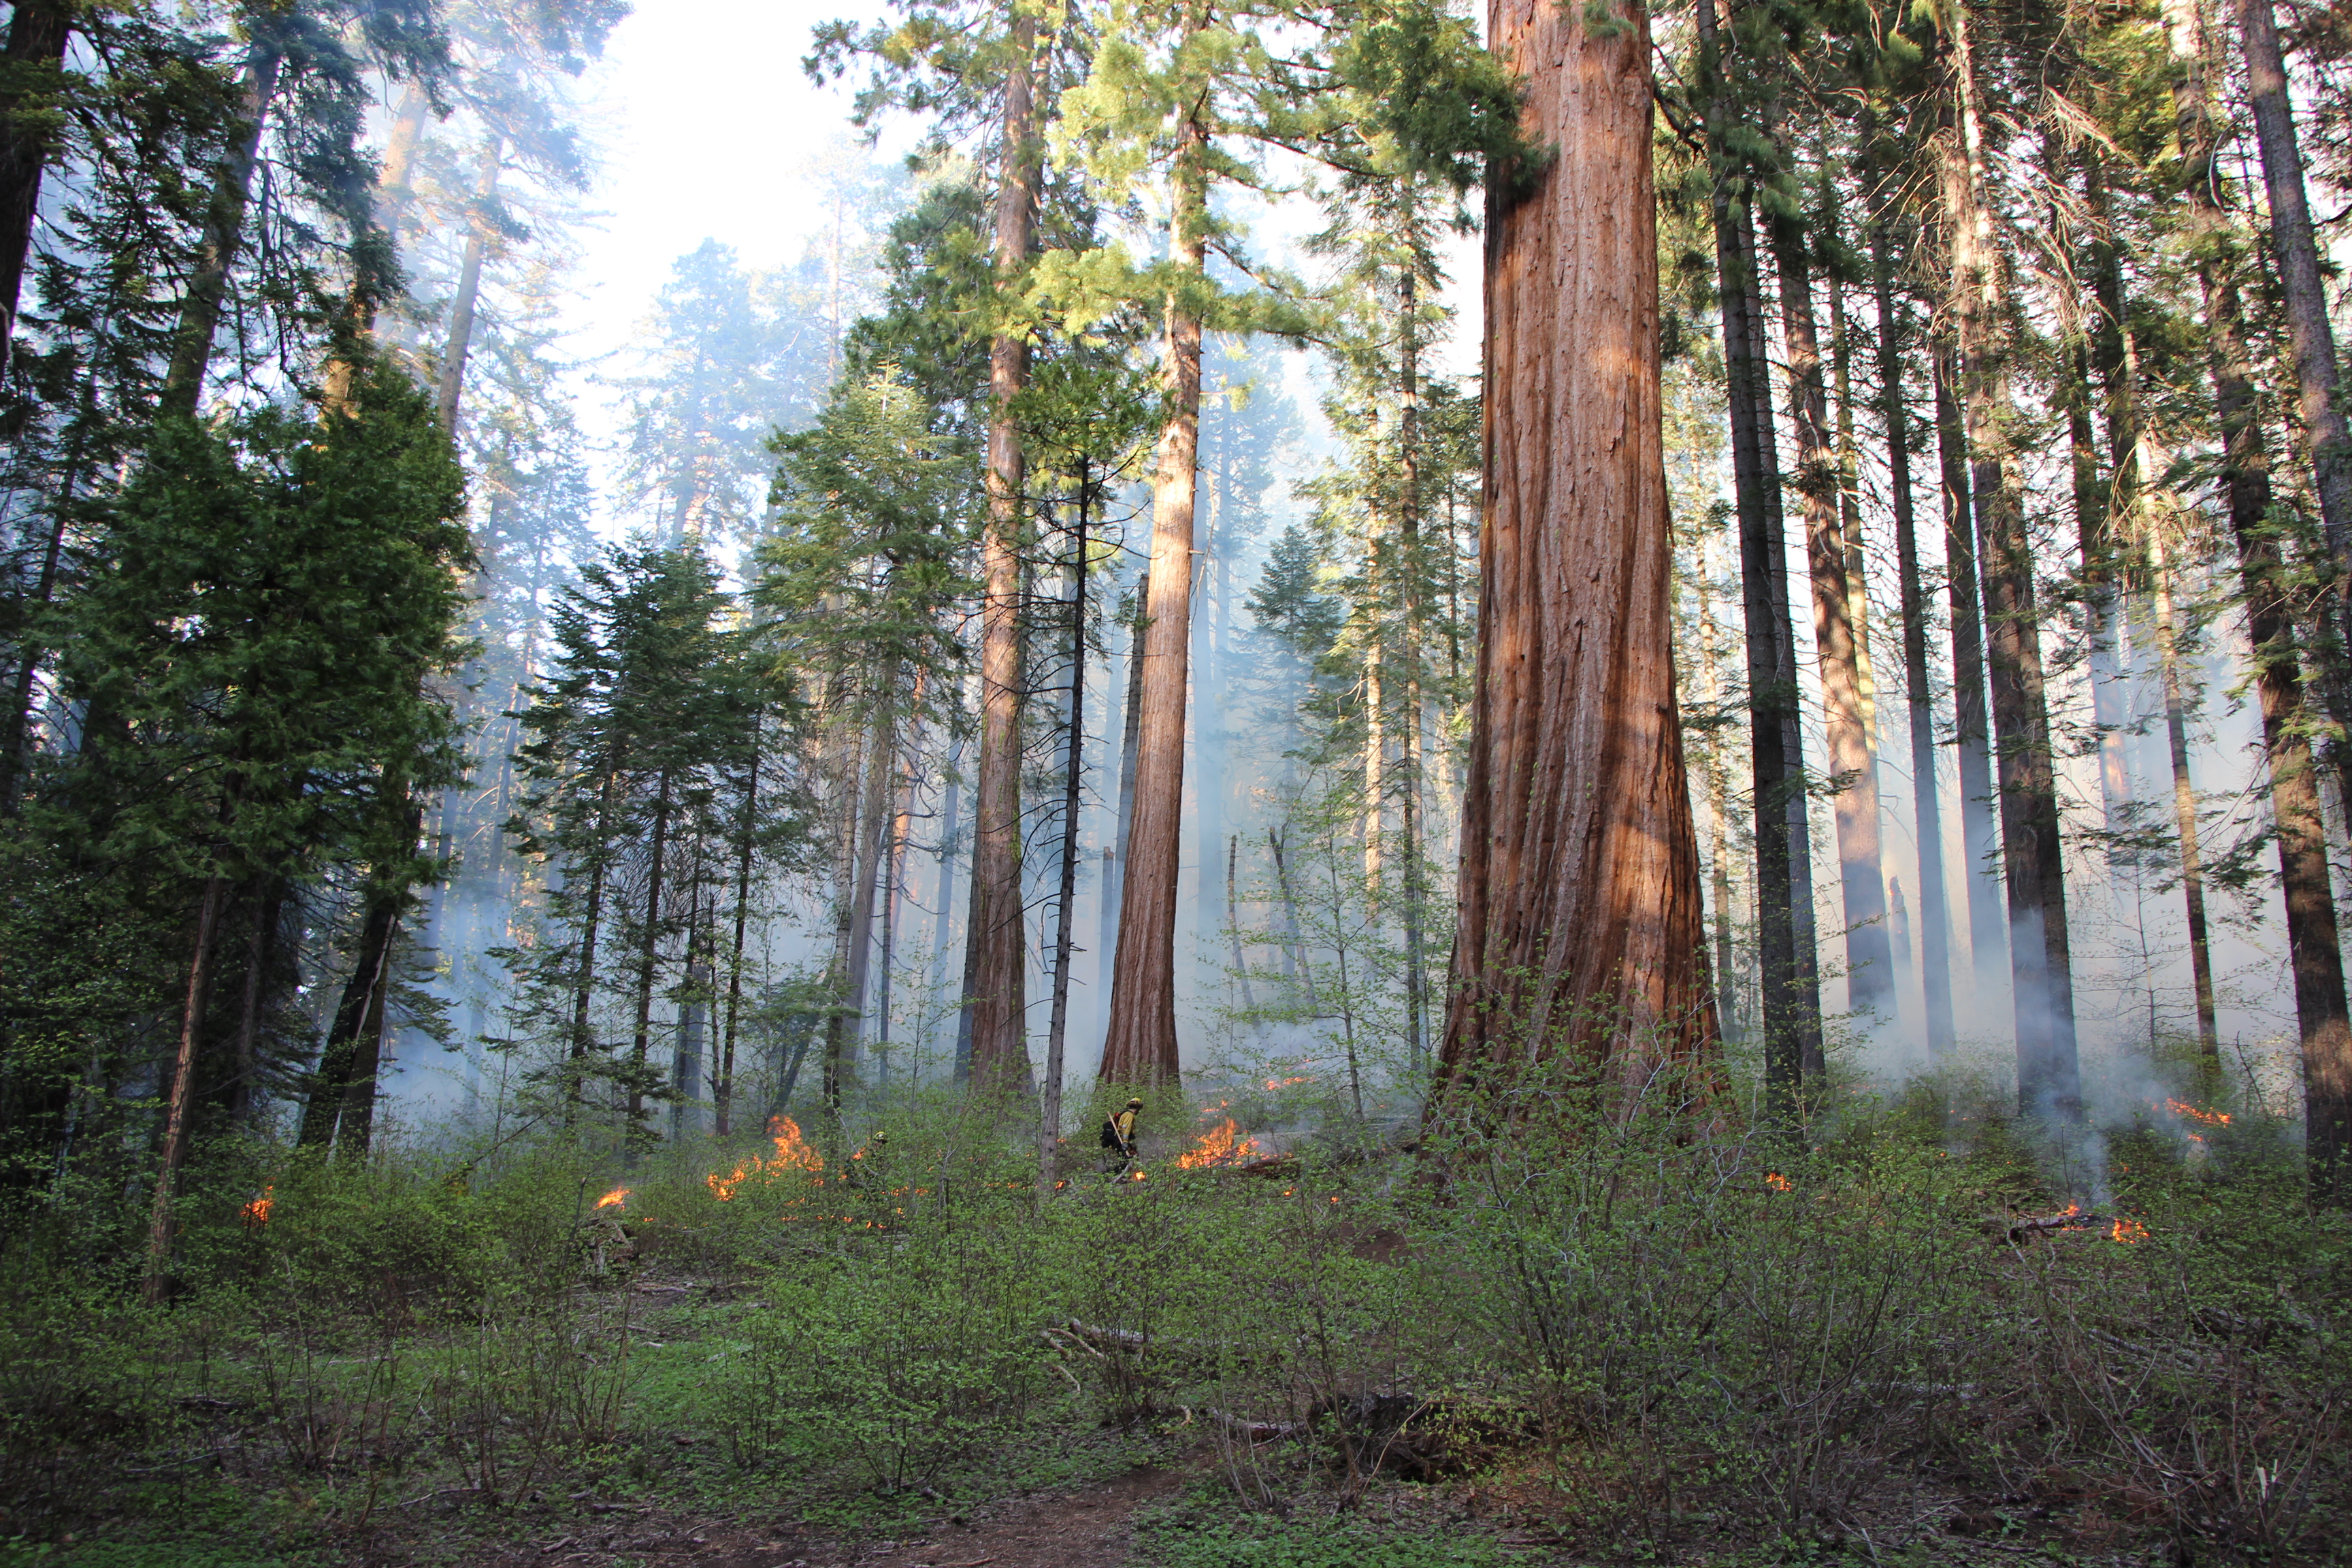 Prescribed fire around giant sequoias 